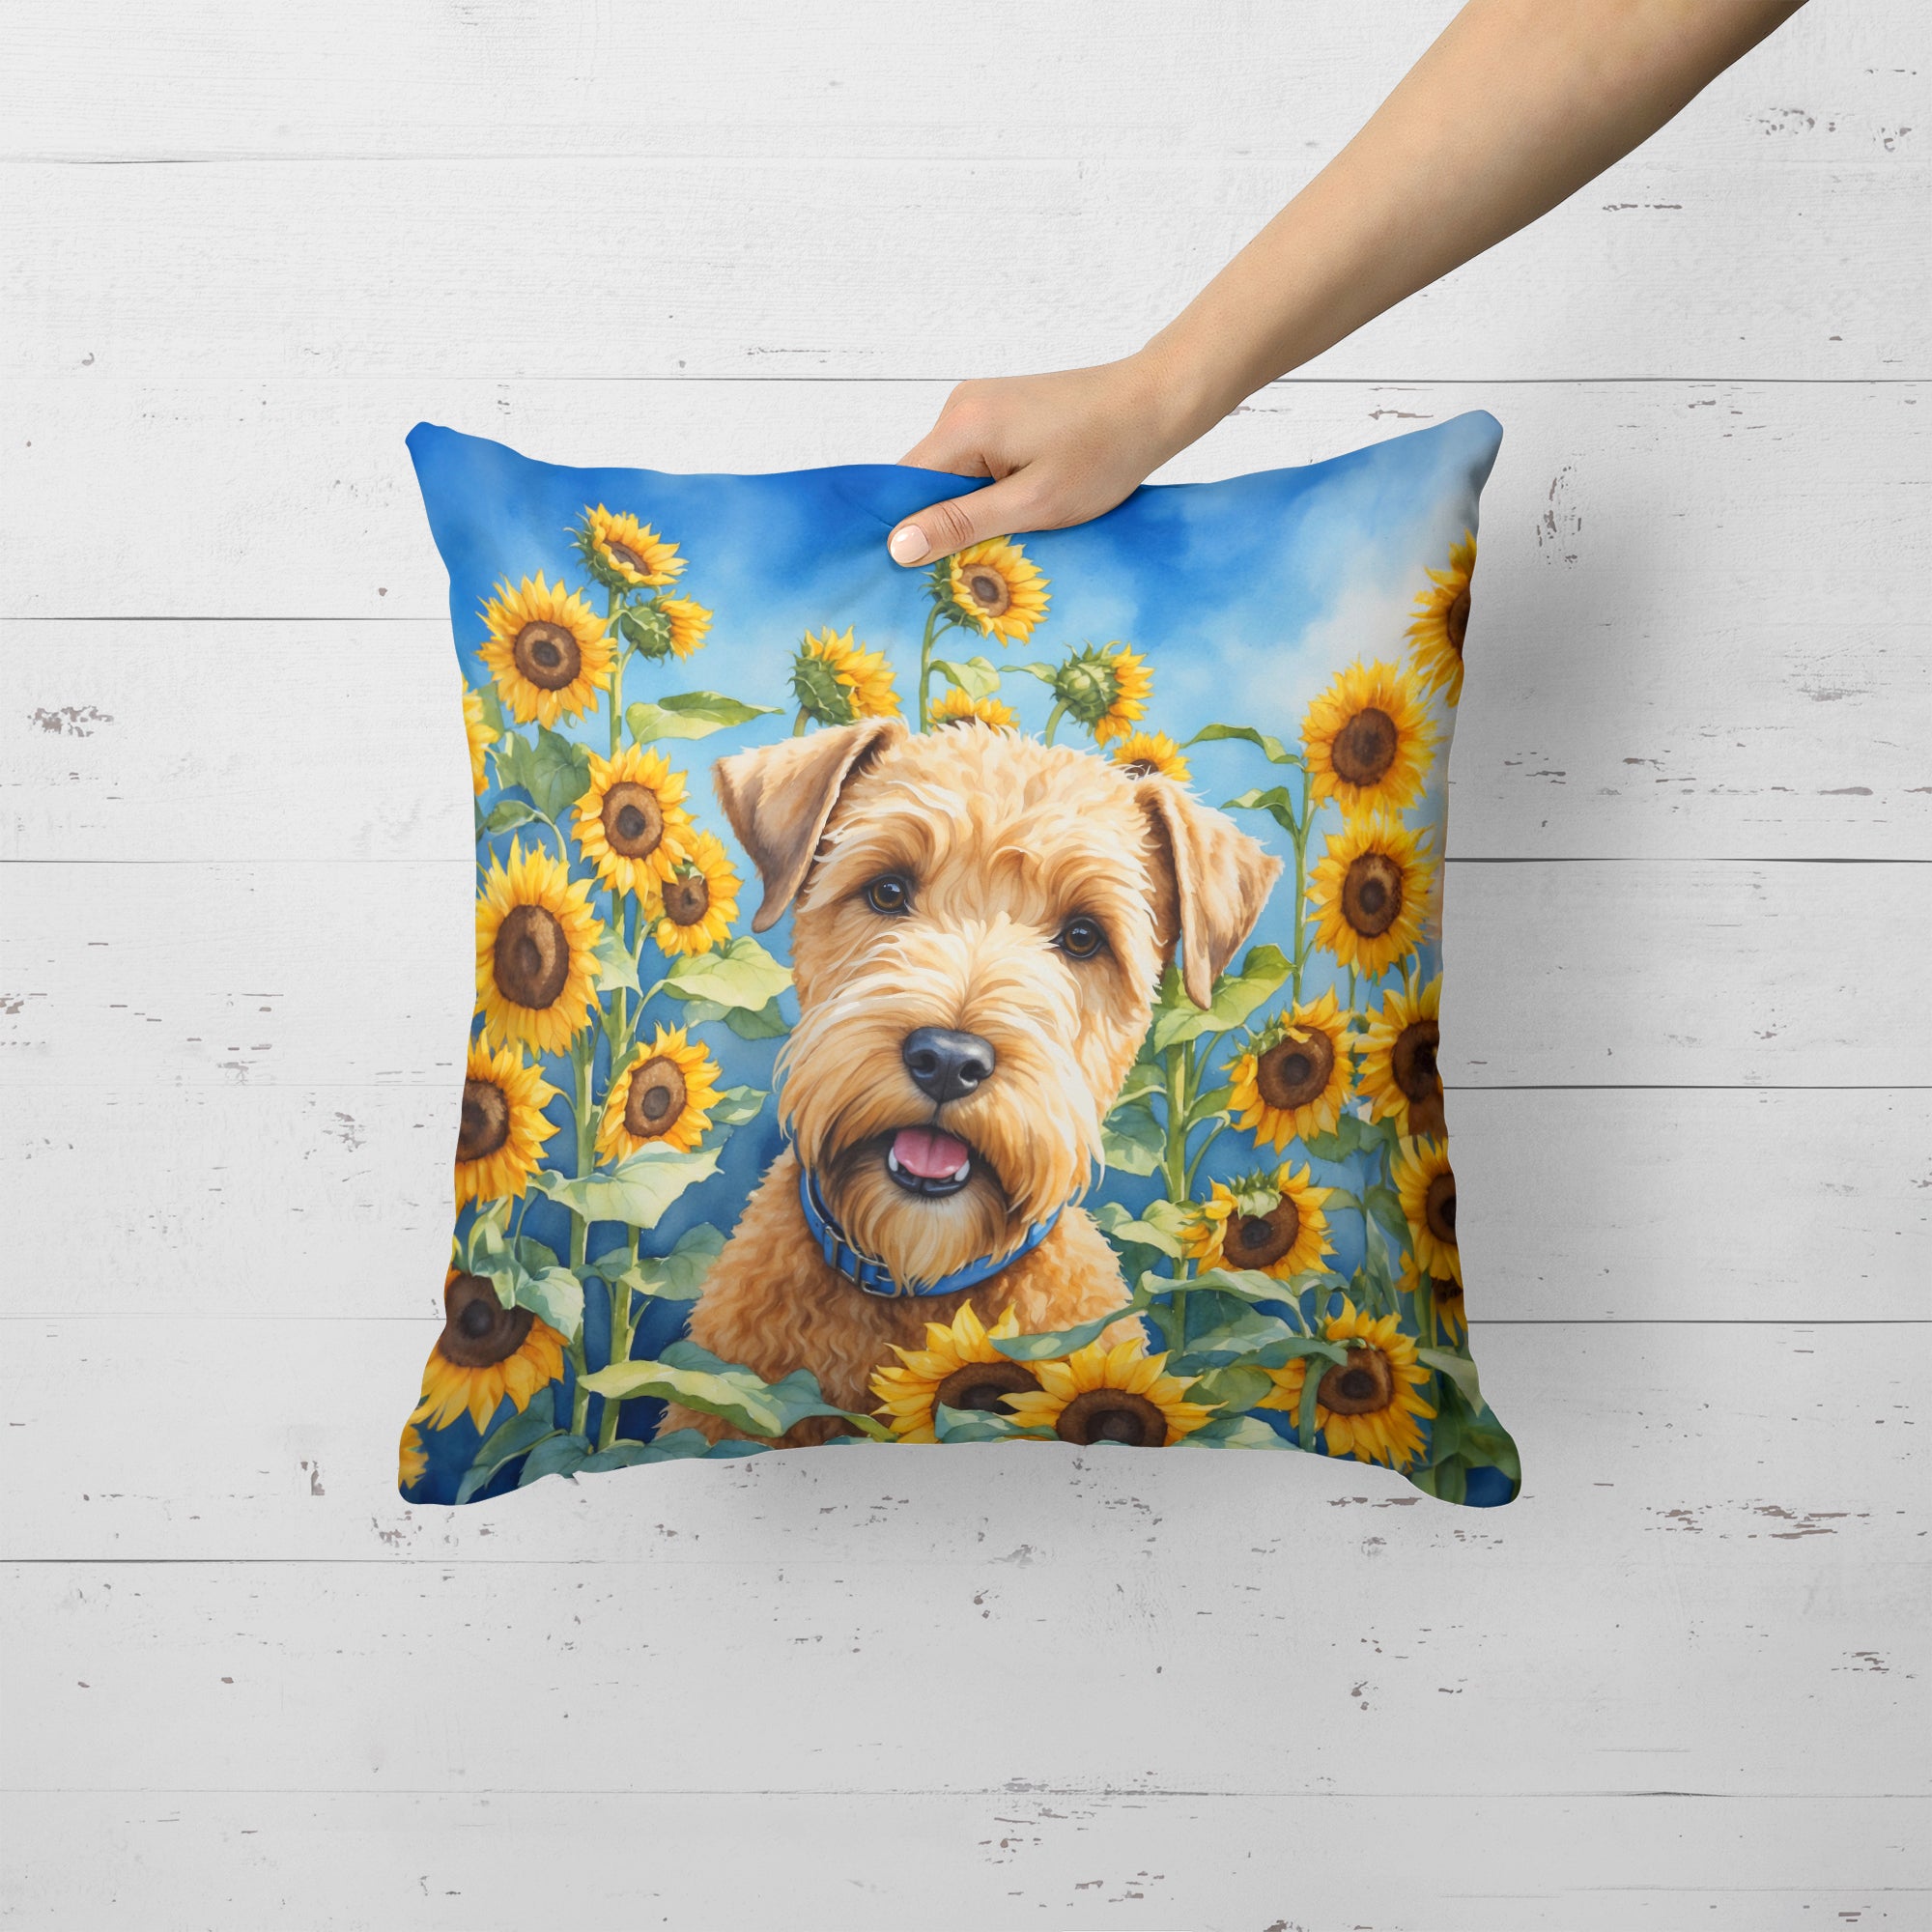 Buy this Wheaten Terrier in Sunflowers Throw Pillow